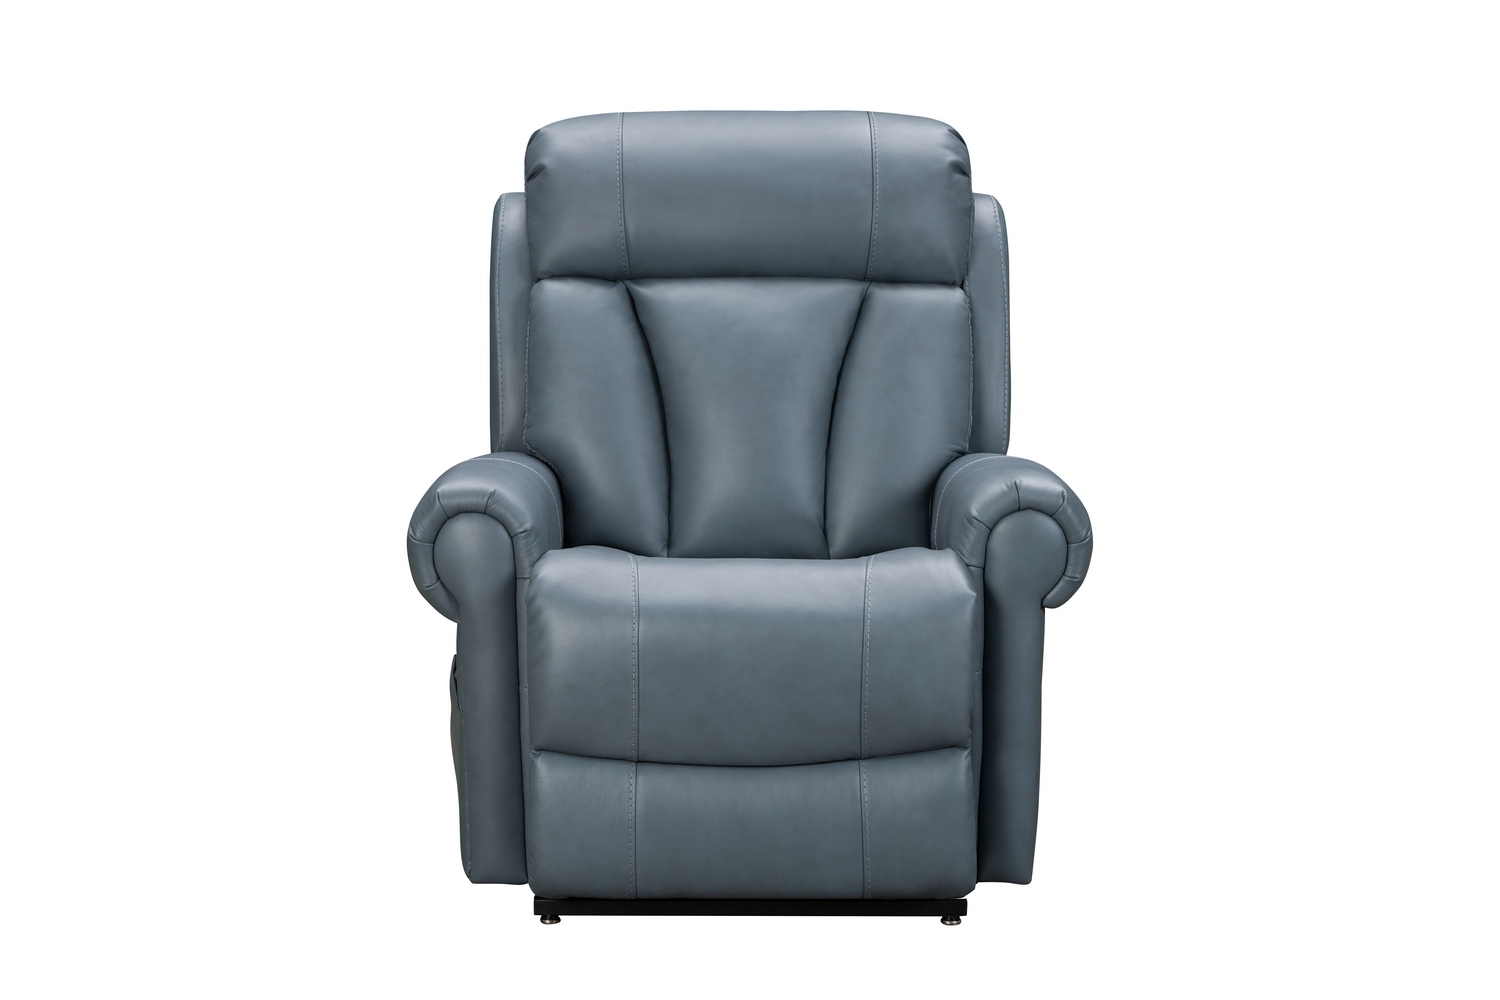 Barcalounger Lyndon Lift Chair Recliner Chair with Power Head Rest, Power Lumbar and Lay Flat Mechanism - Masen Bluegray/Leather Match